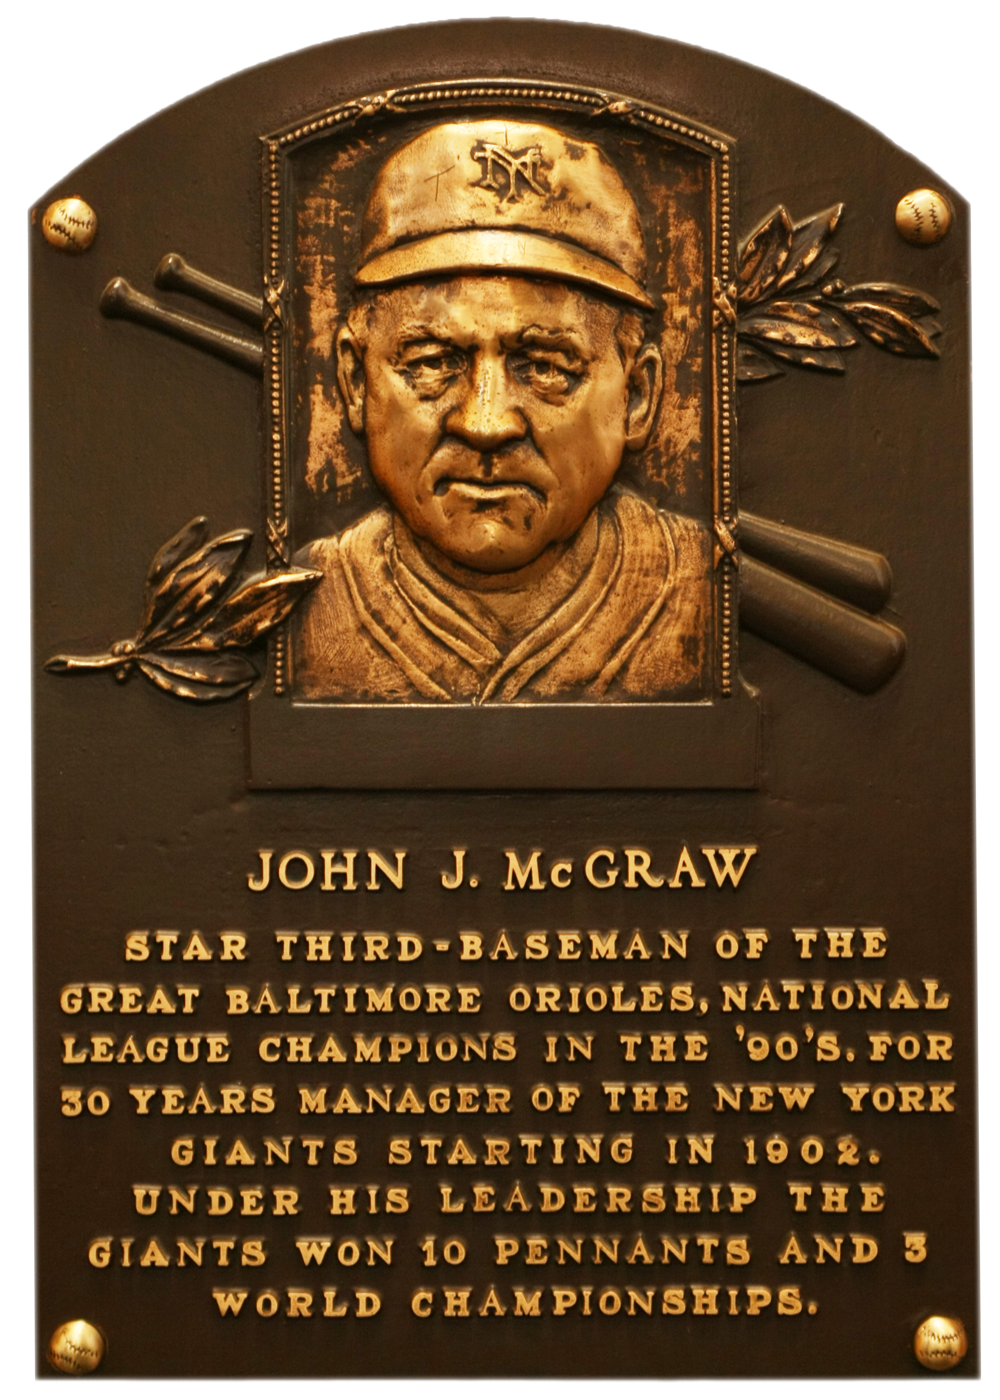 John McGraw Hall of Fame plaque